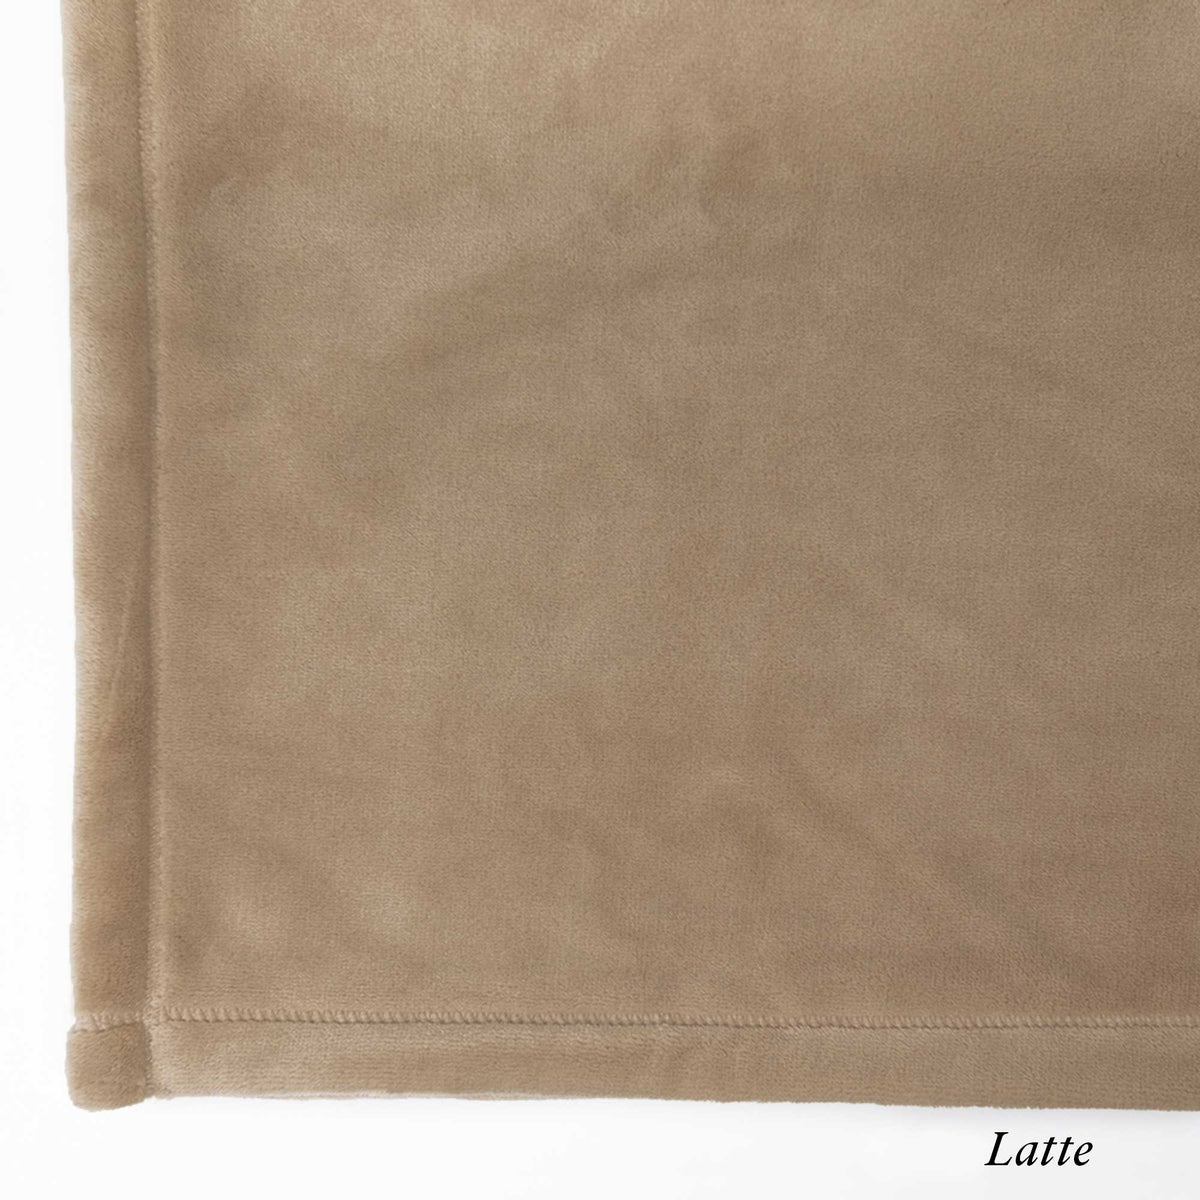 Latte - Assorted Corporate Gift - Luster Loft Fleece Throws - American Blanket Company